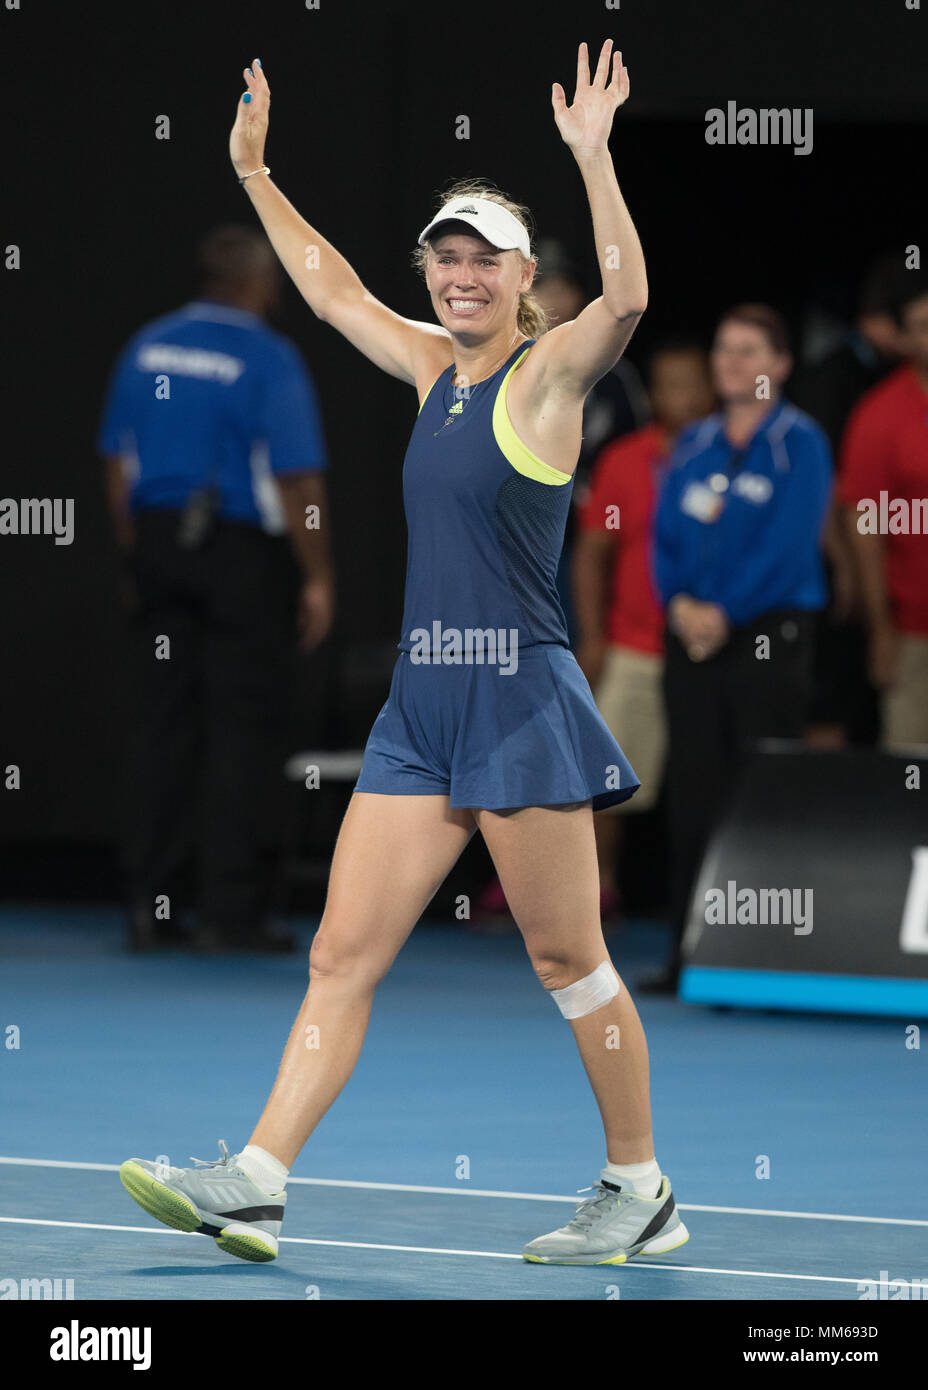 kryds Lee voksenalderen Danish tennis player Caroline Wozniacki celebrating during women's singles  match in Australian Open 2018 Tennis Tournament, Melbourne Park, Melbourne  Stock Photo - Alamy